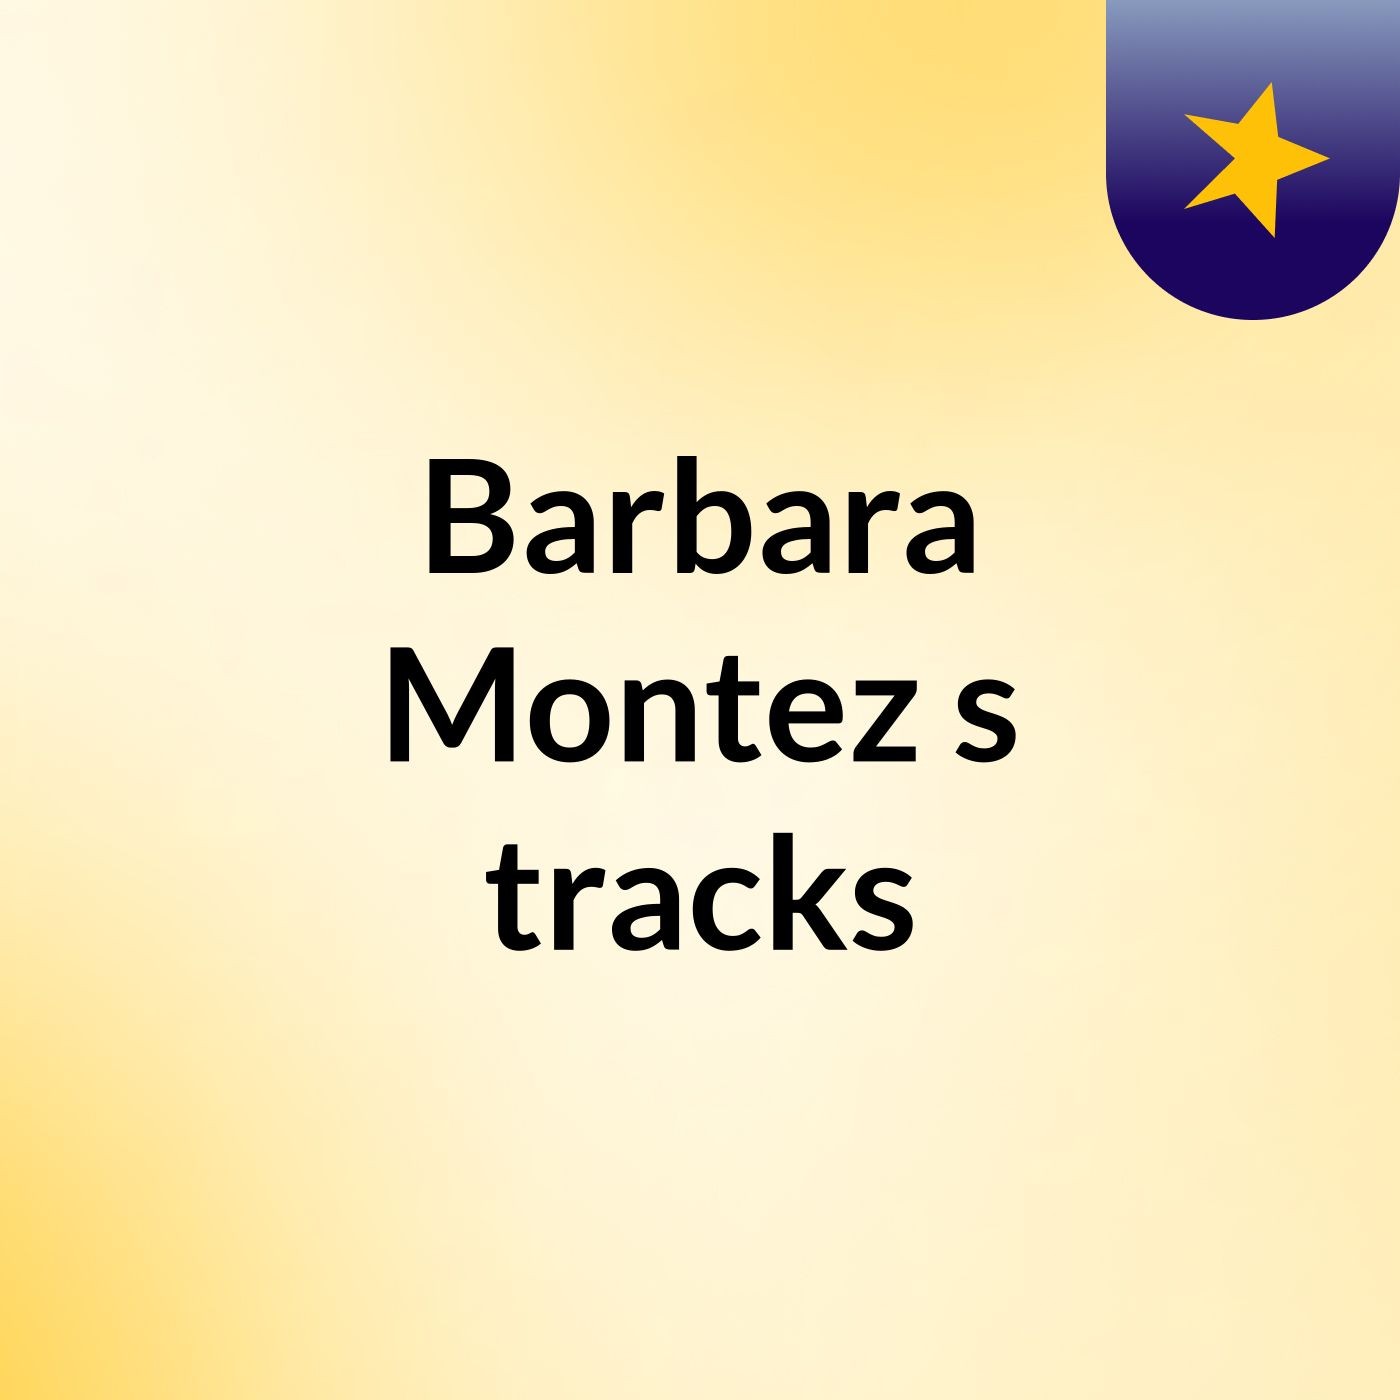 Barbara Montez's tracks